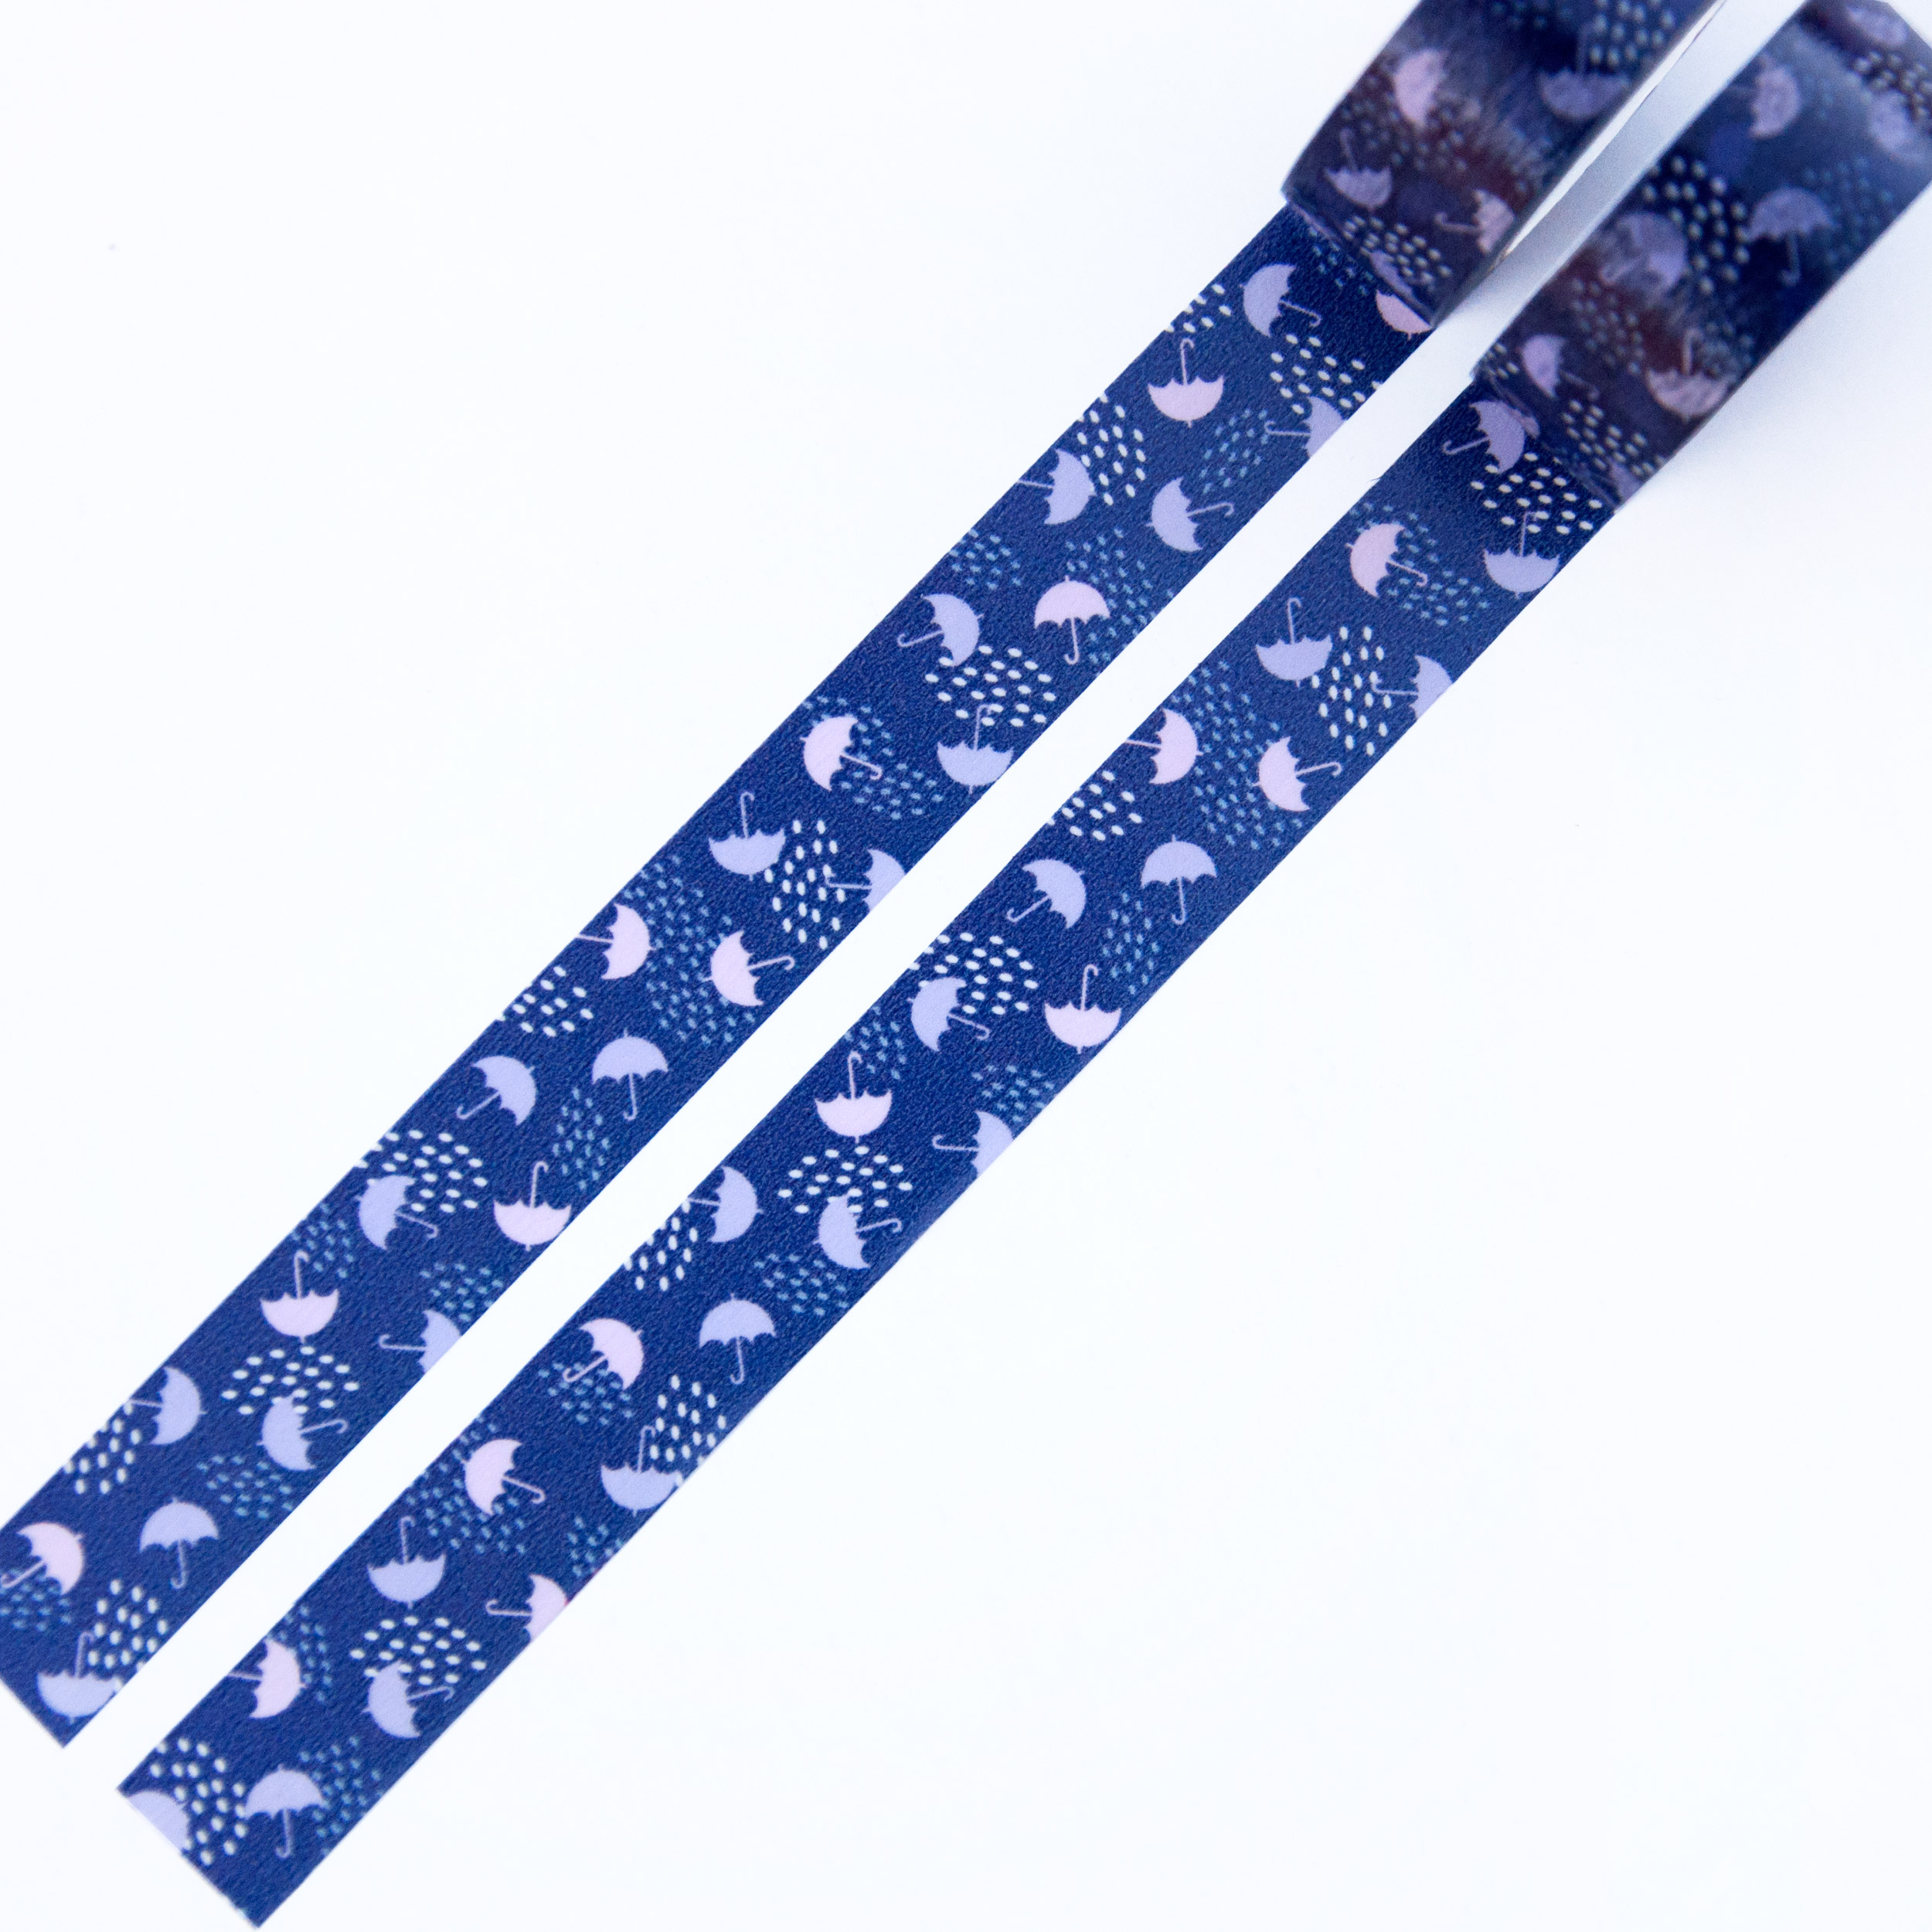 Flying Umbrellas Washi Tape - Design by Willwa